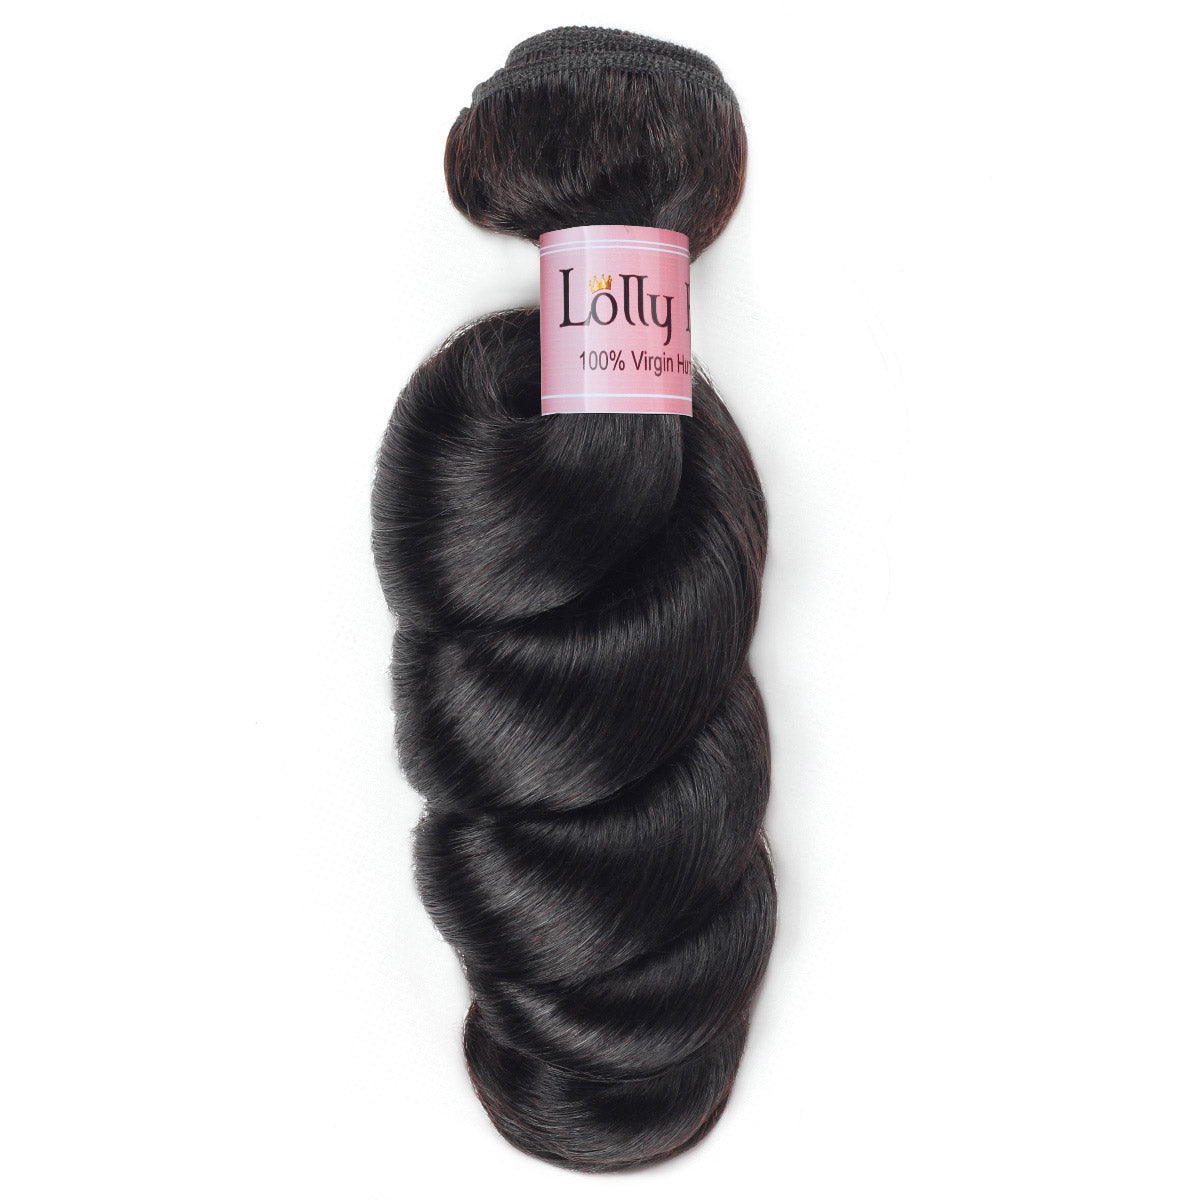 Lolly Hair Loose Wave Hair Extension 1 Bundle 